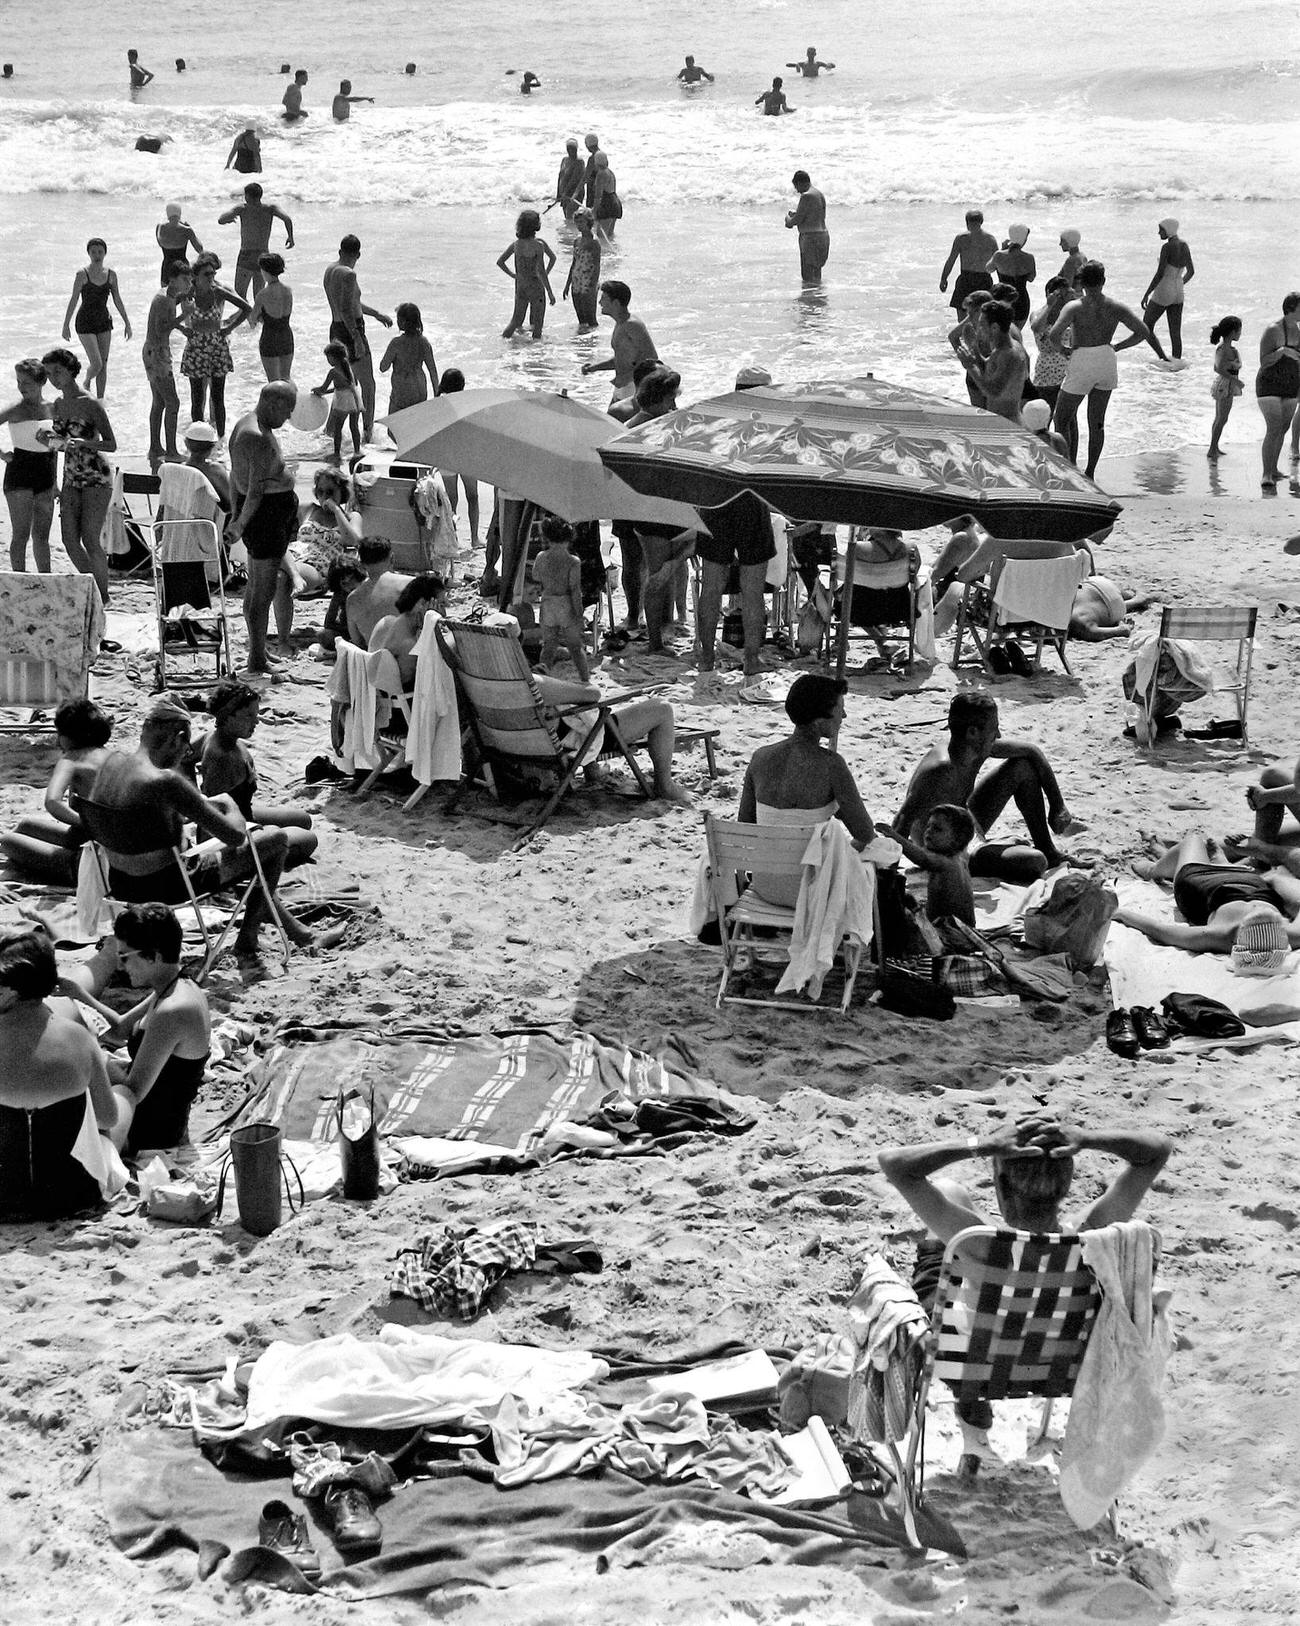 Beachgoers Sunbathing And Swimming At Coney Island Beach, Brooklyn, 1950.